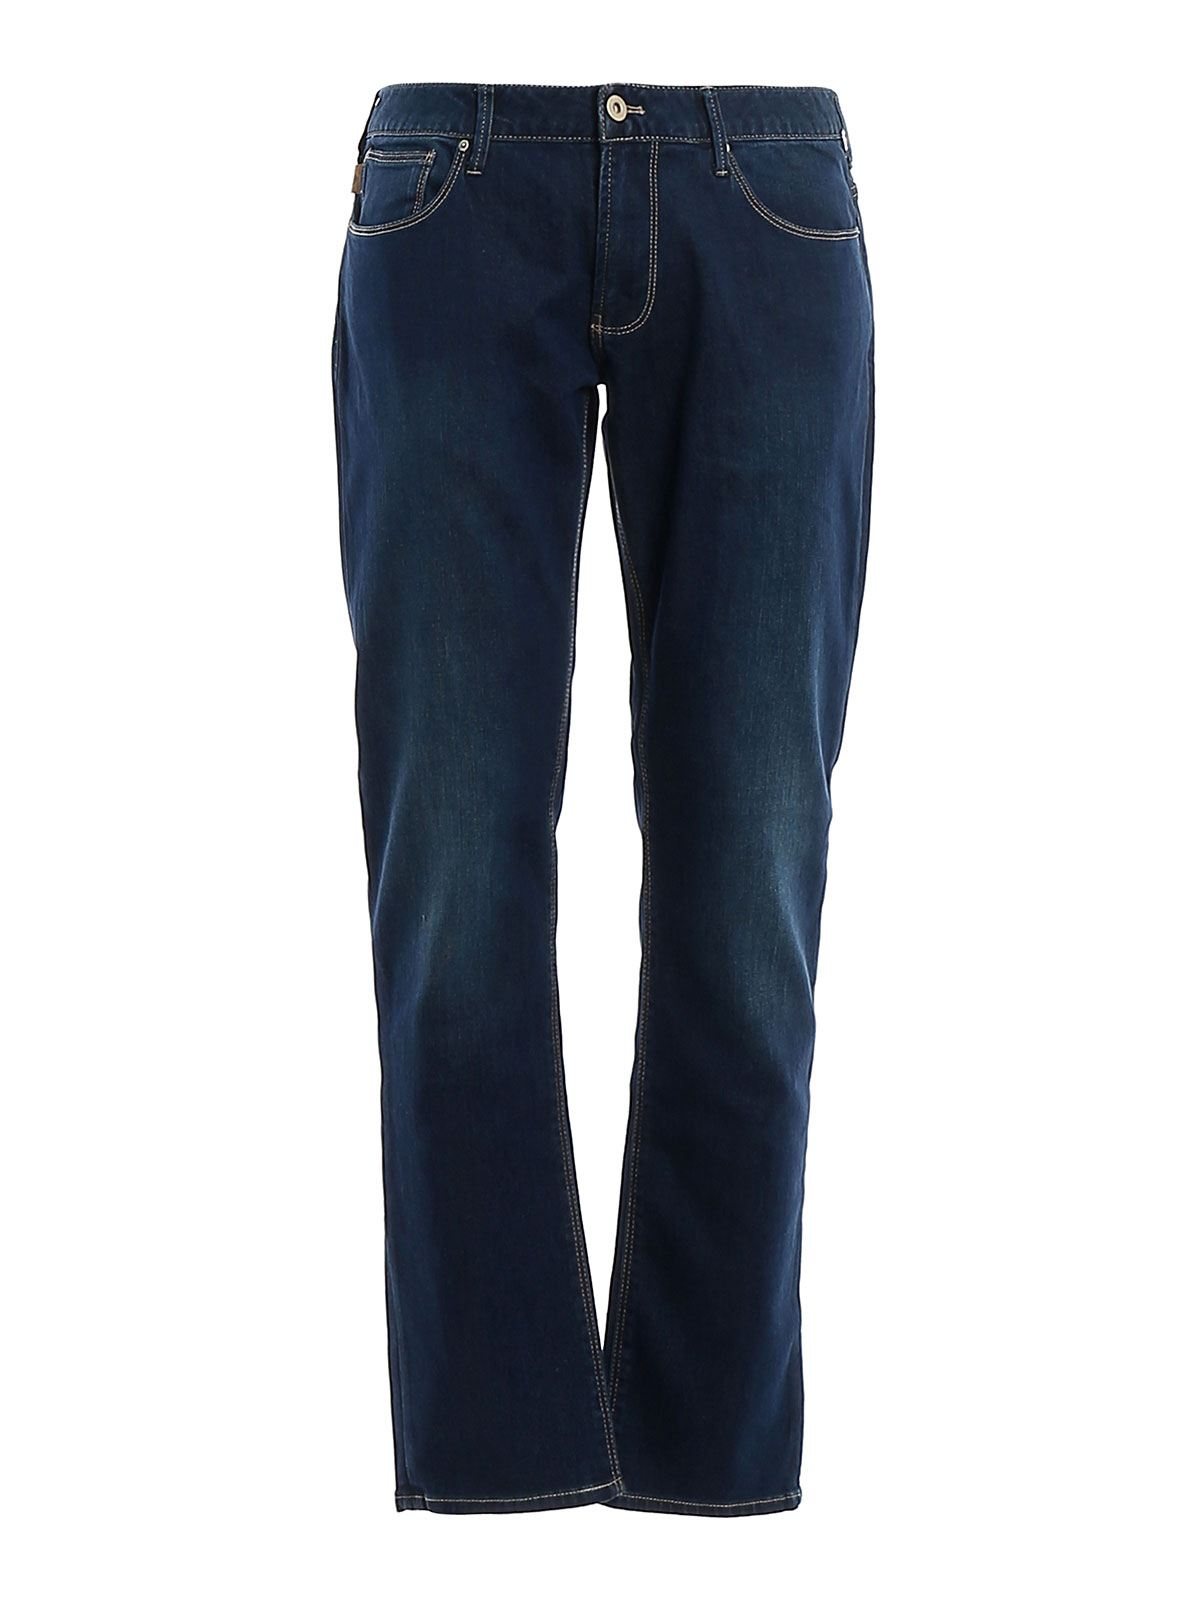 armani jeans online store